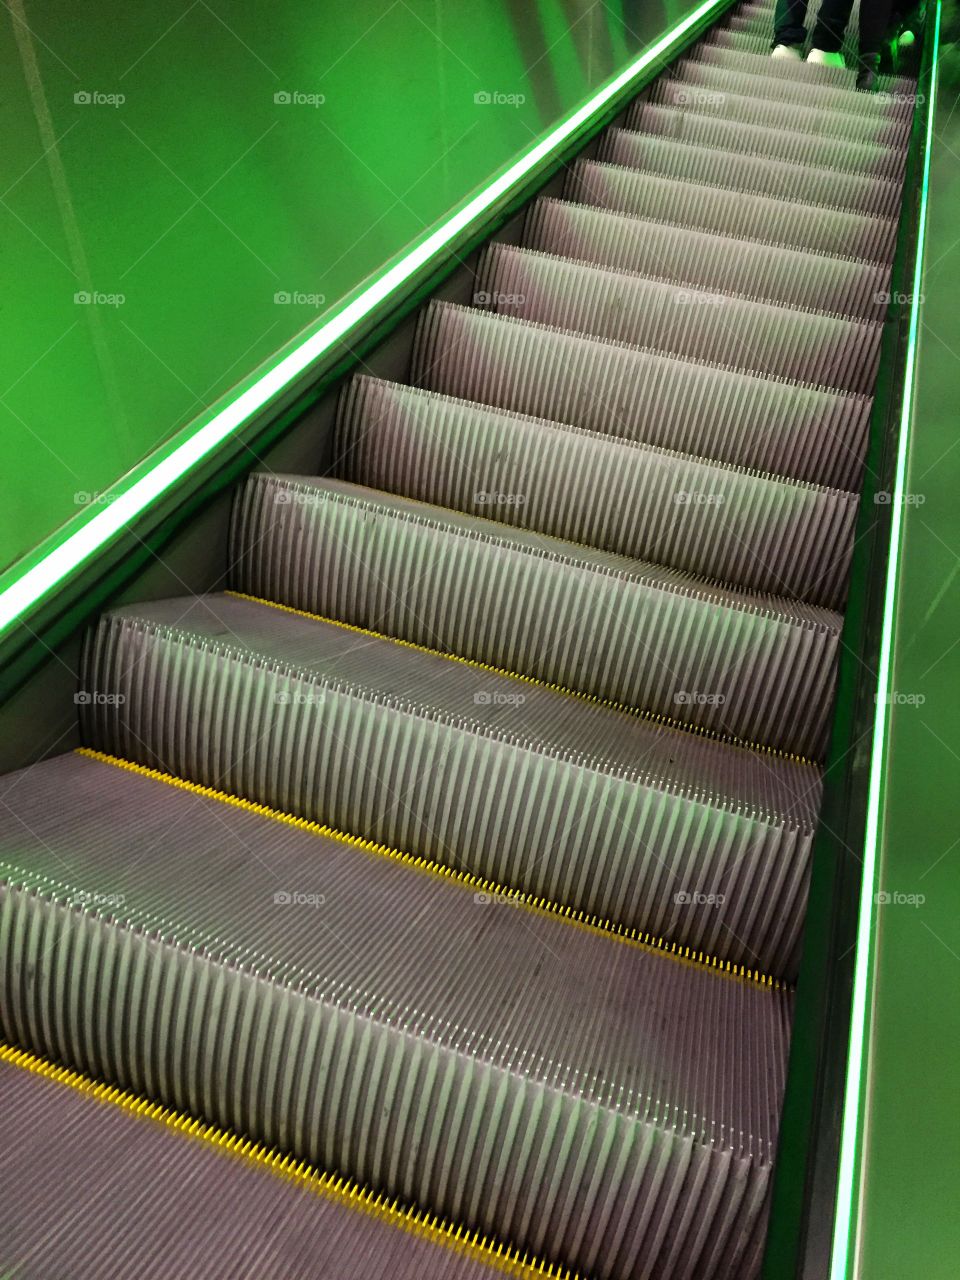 Escalator
